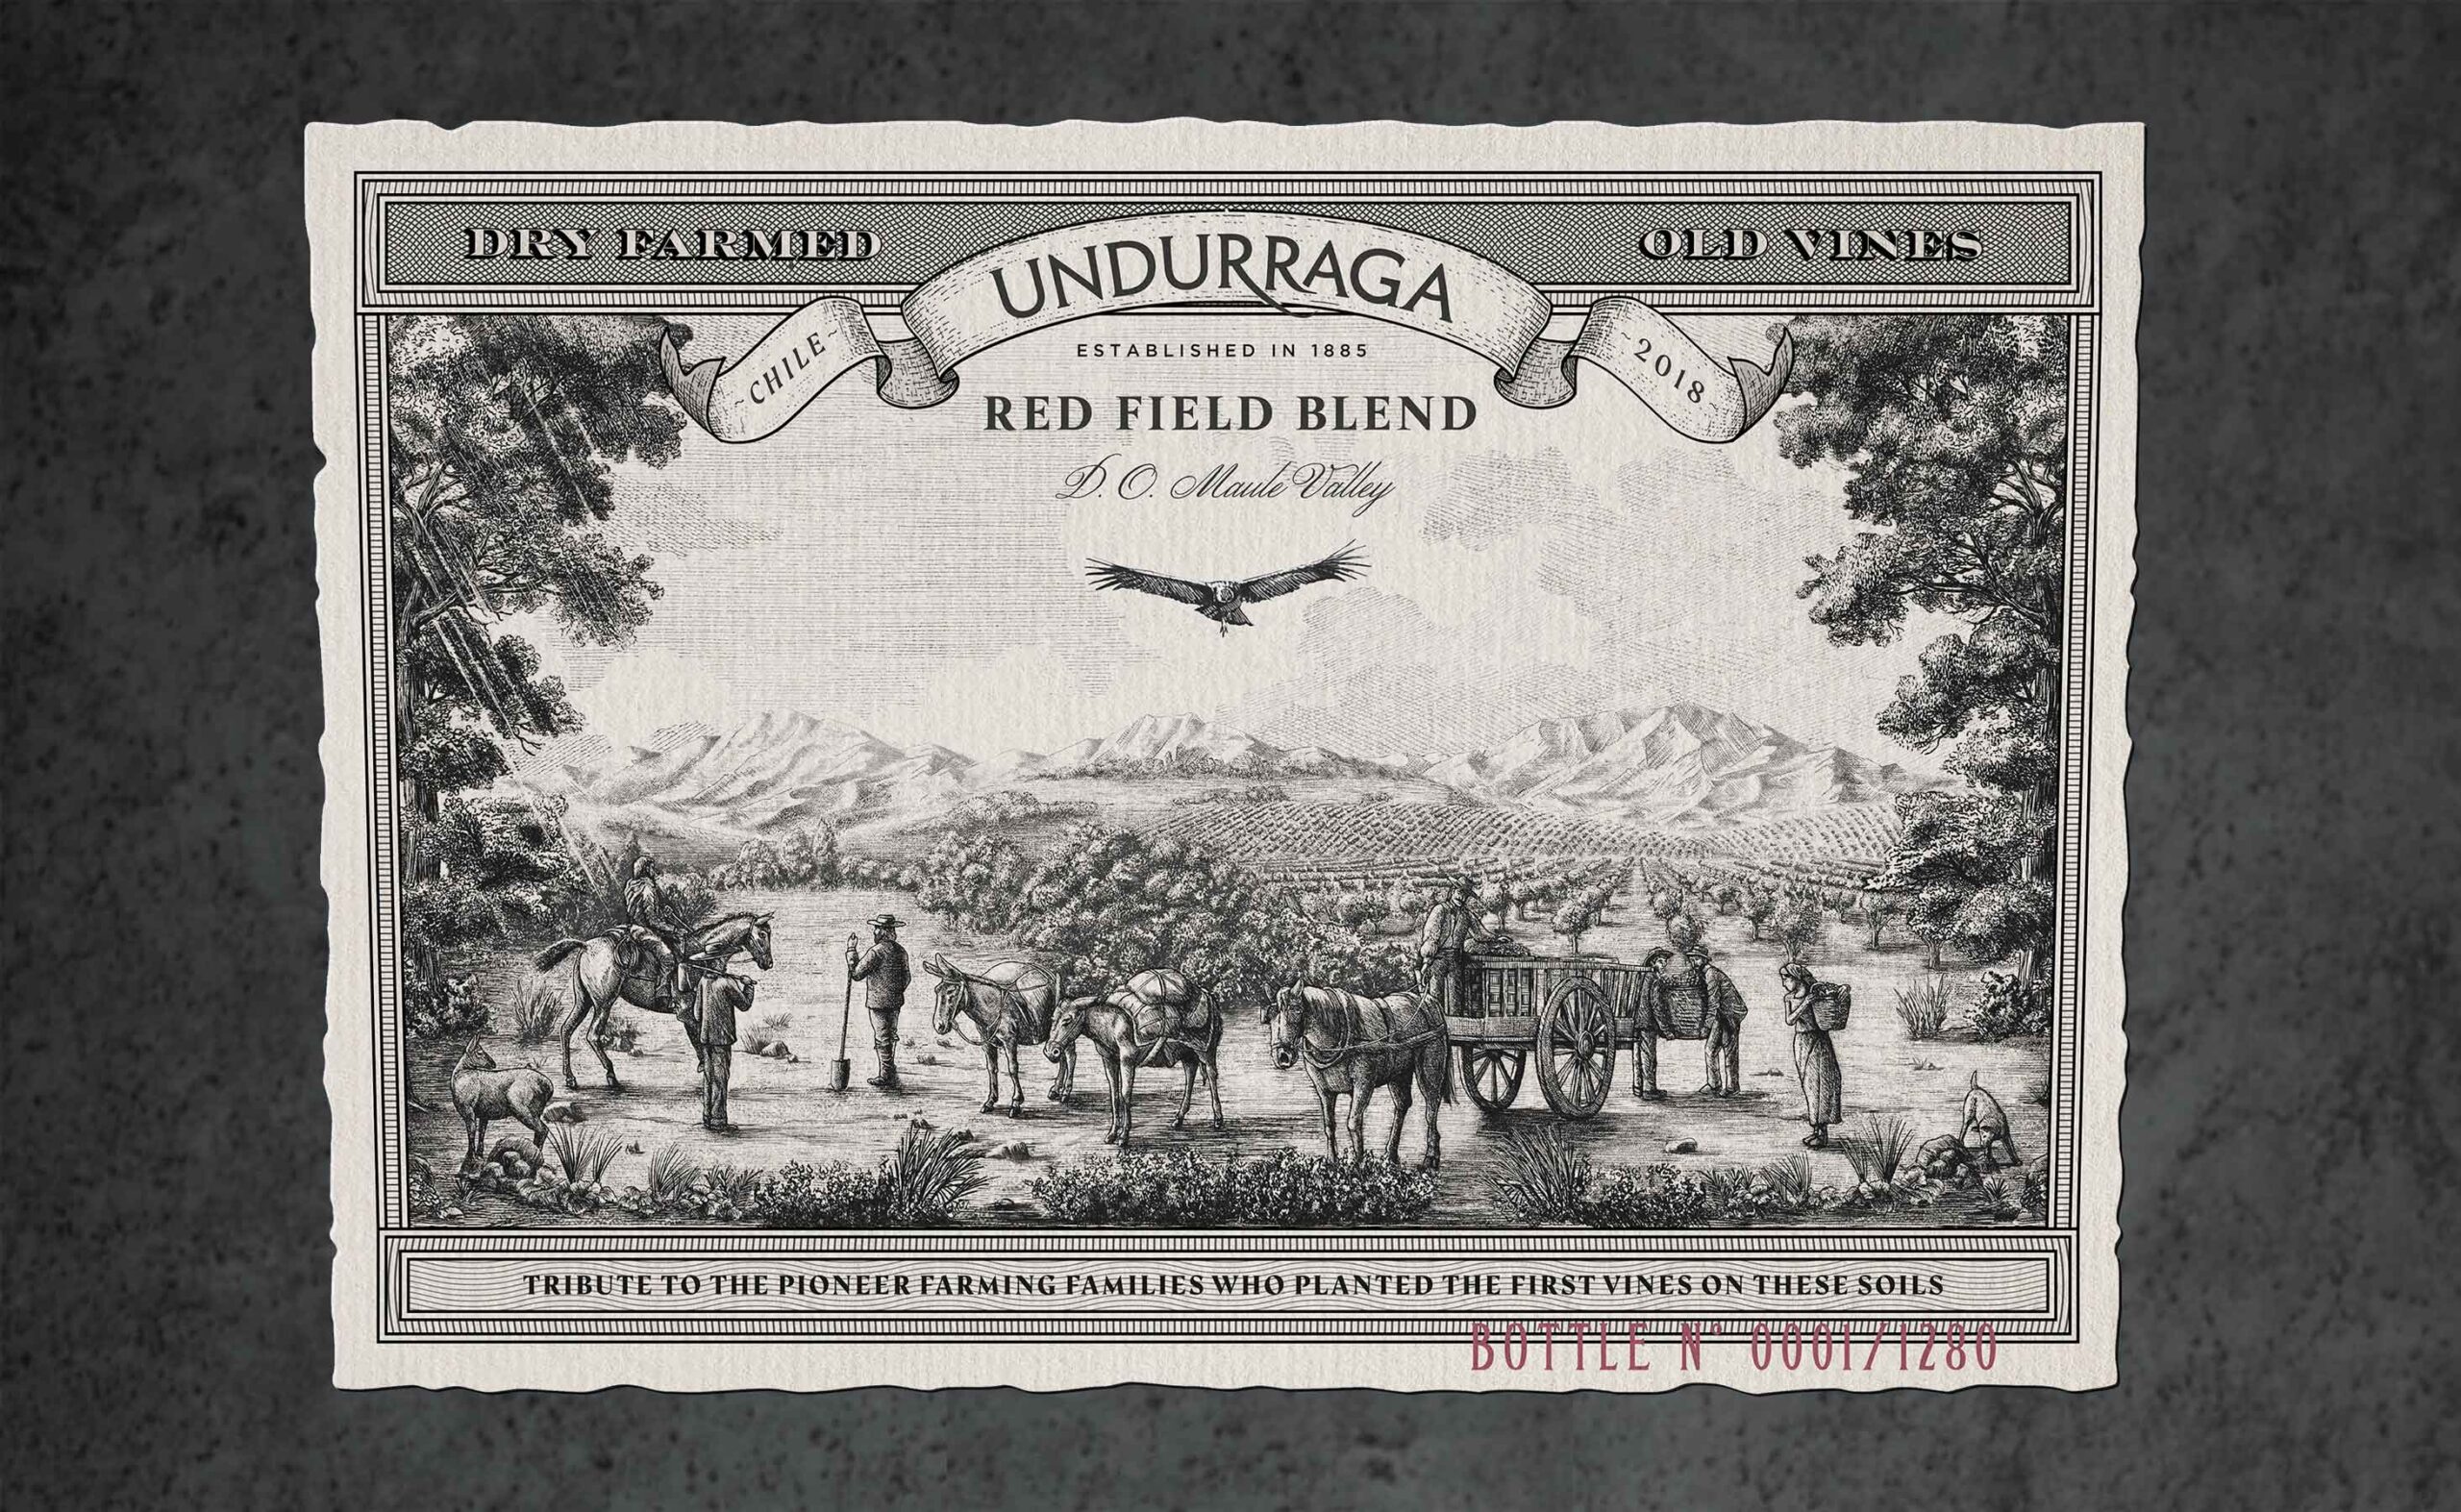 Red Field Blend wine label design for Undurraga wines in Chile illustration engraved premium